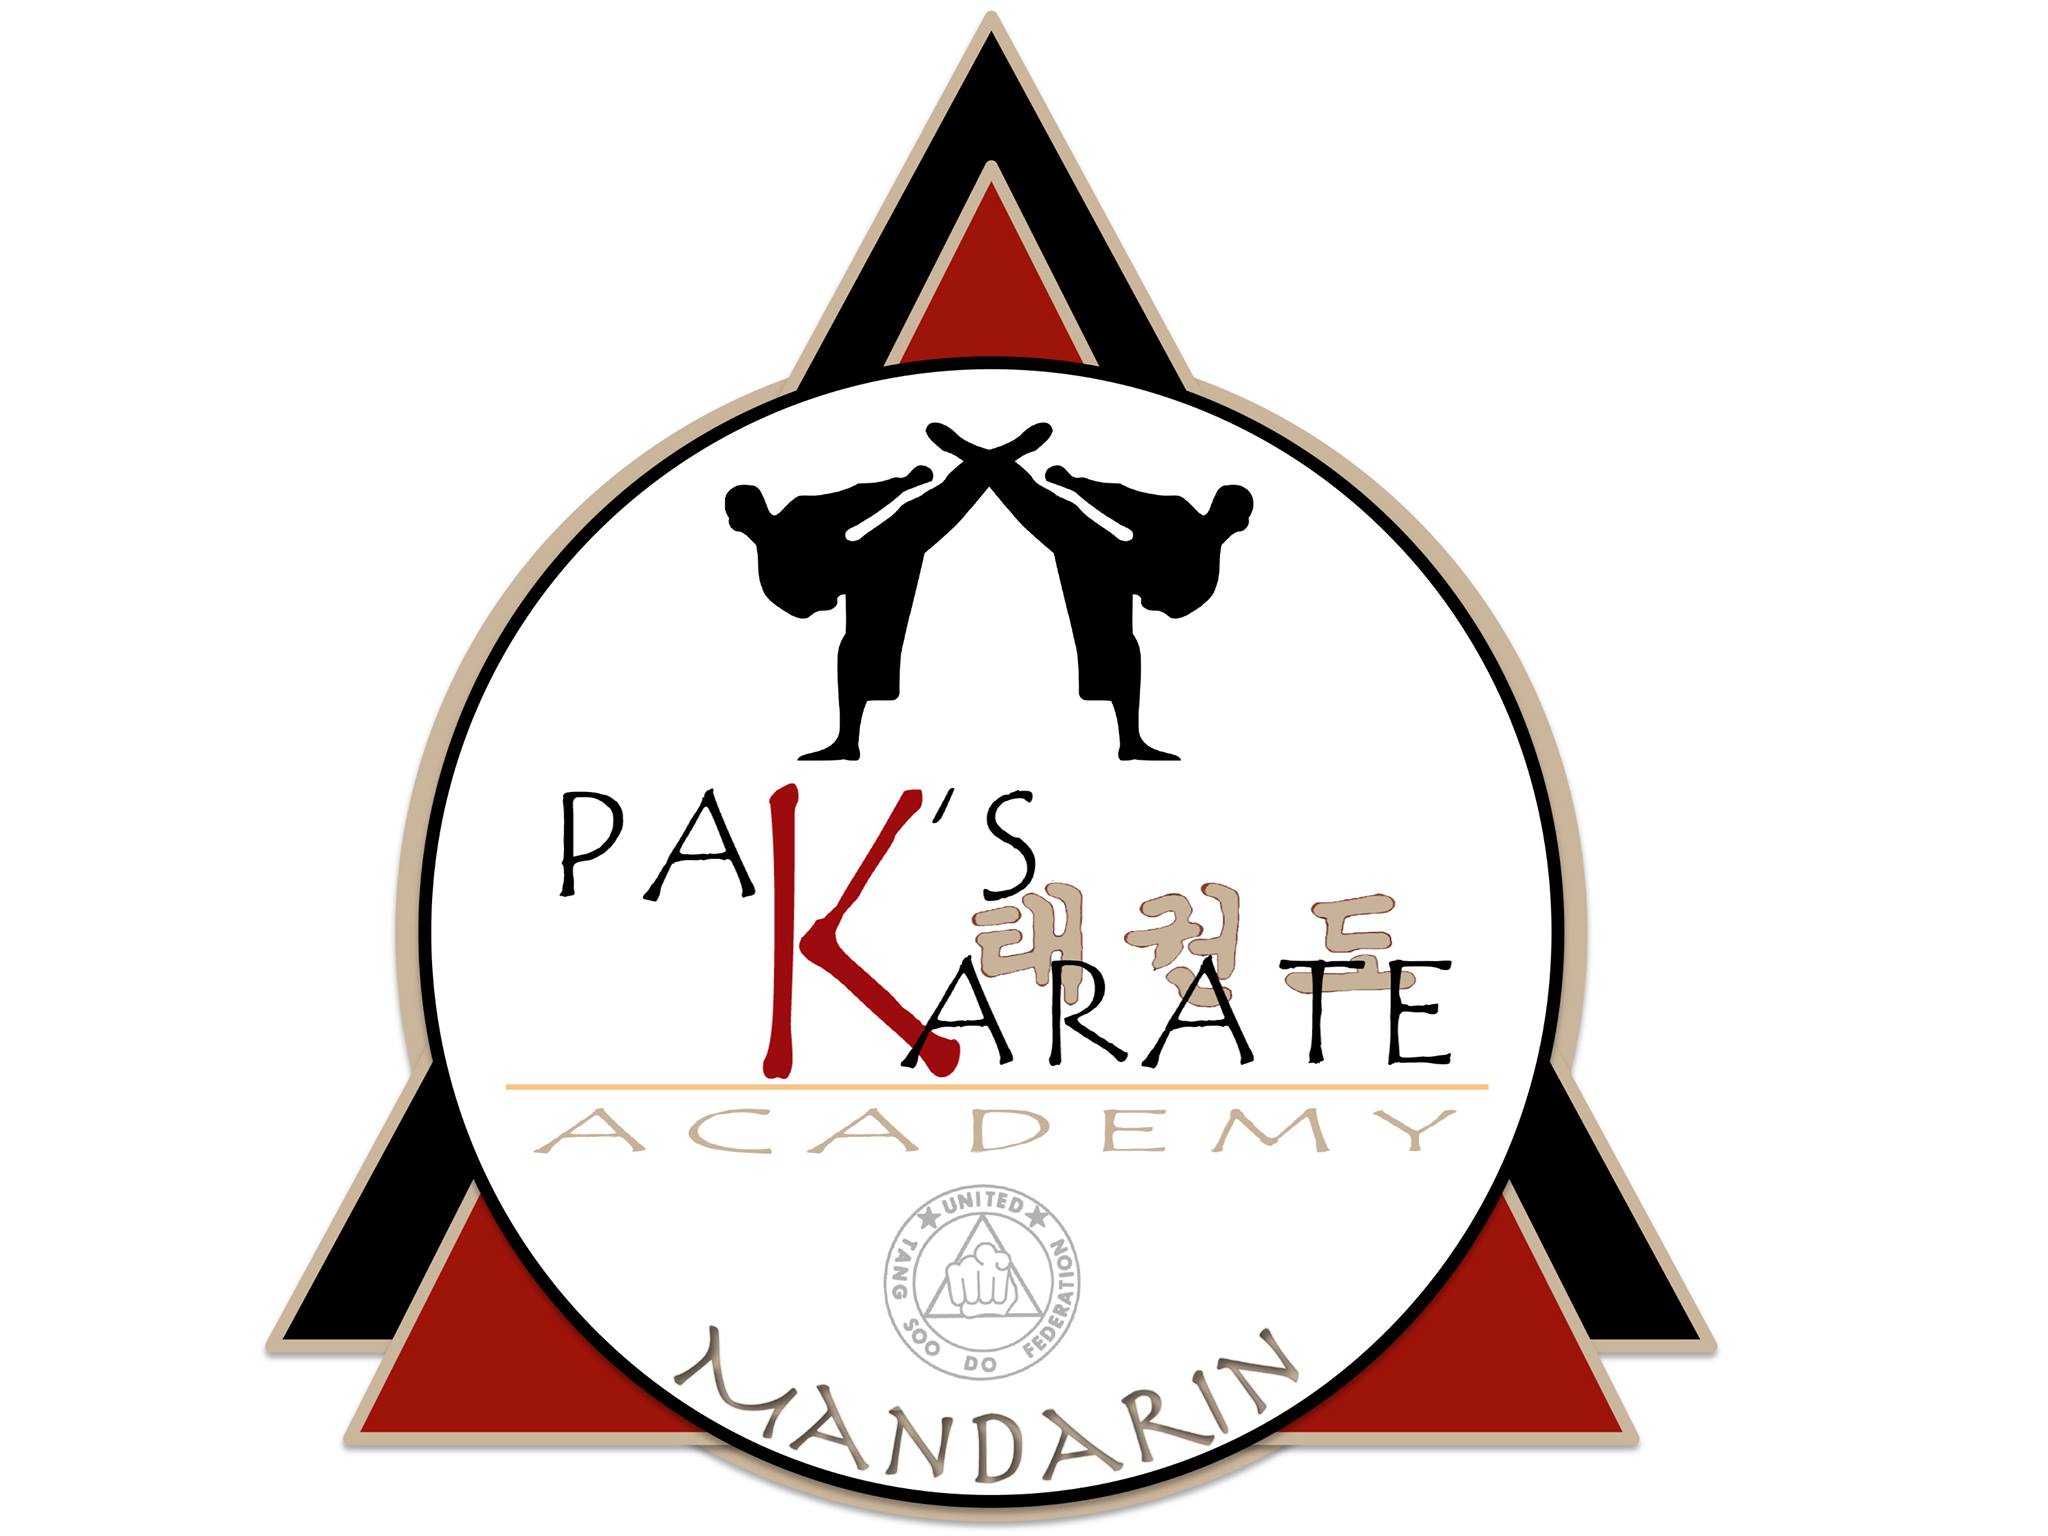 Pak’s Karate of Mandarin